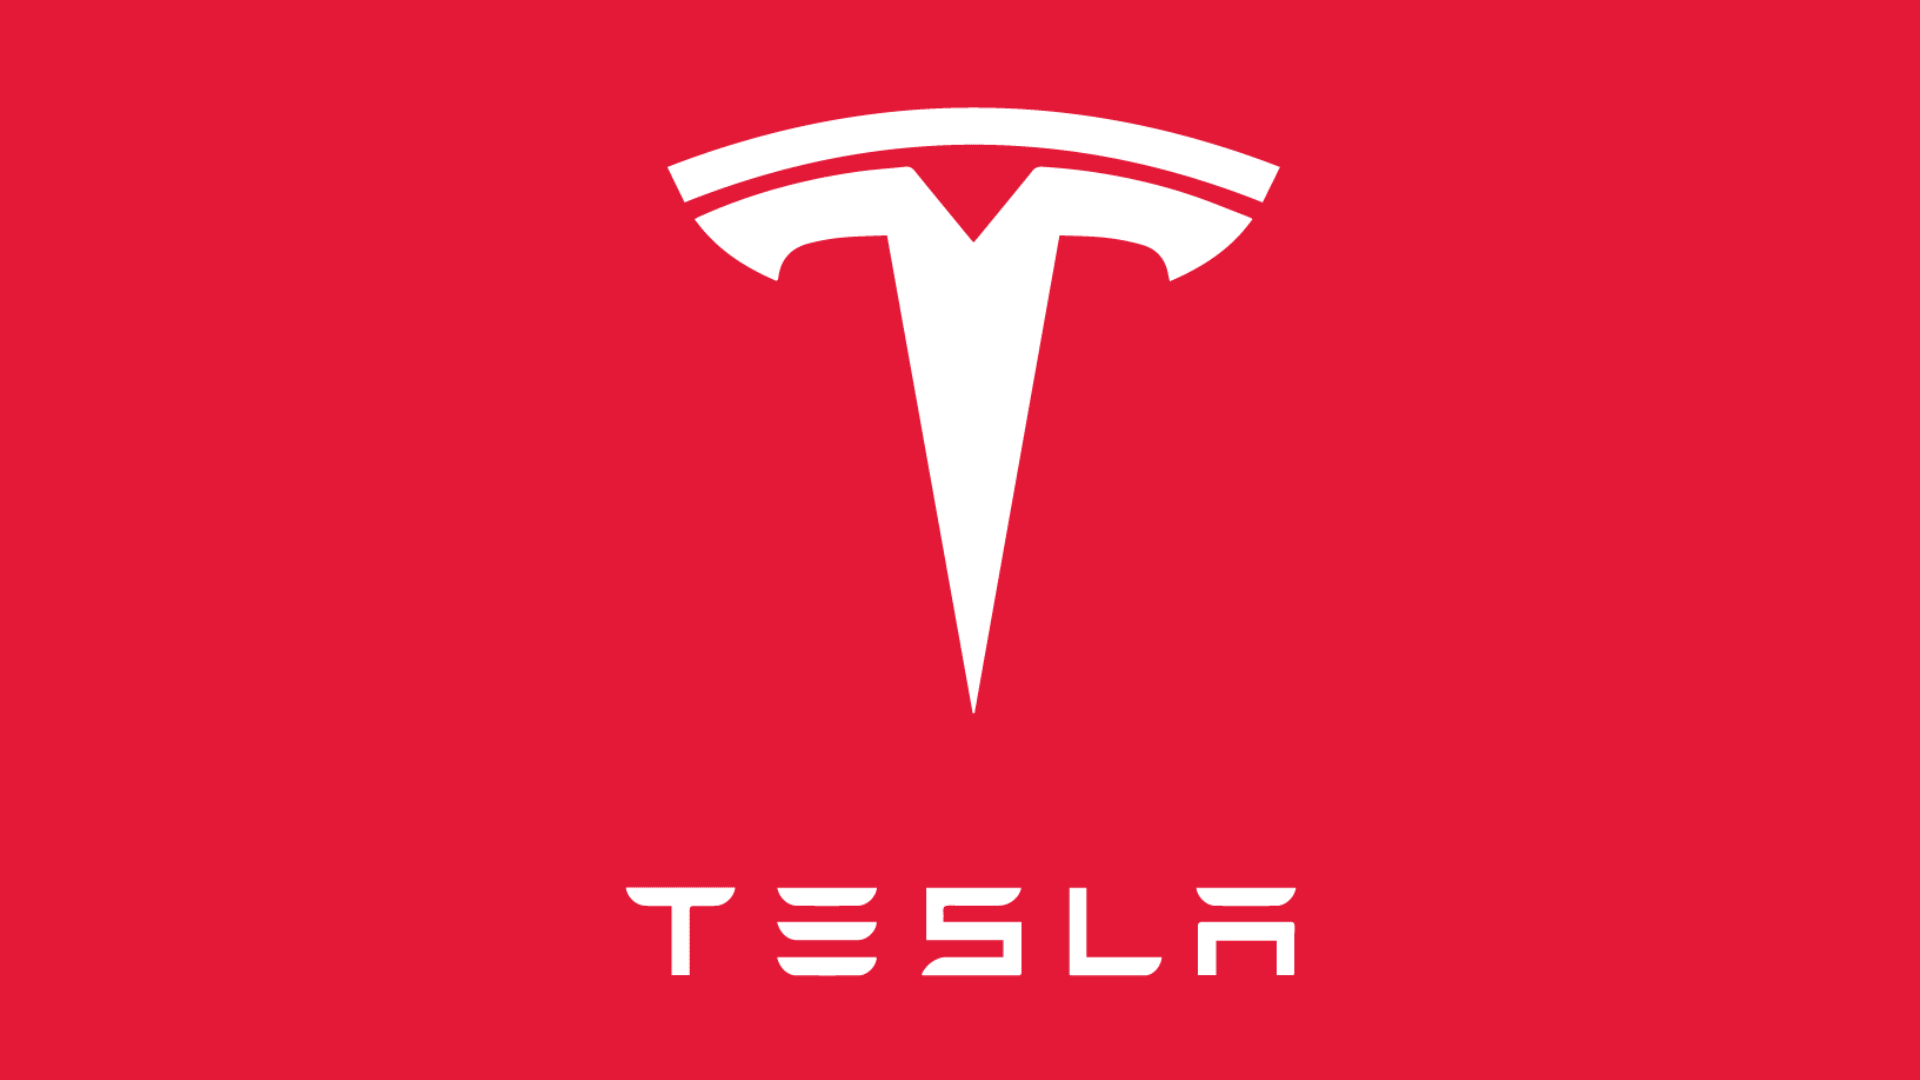 Tesla Model 3 Logo - Will the Tesla Model 3 Really Sell for $000?